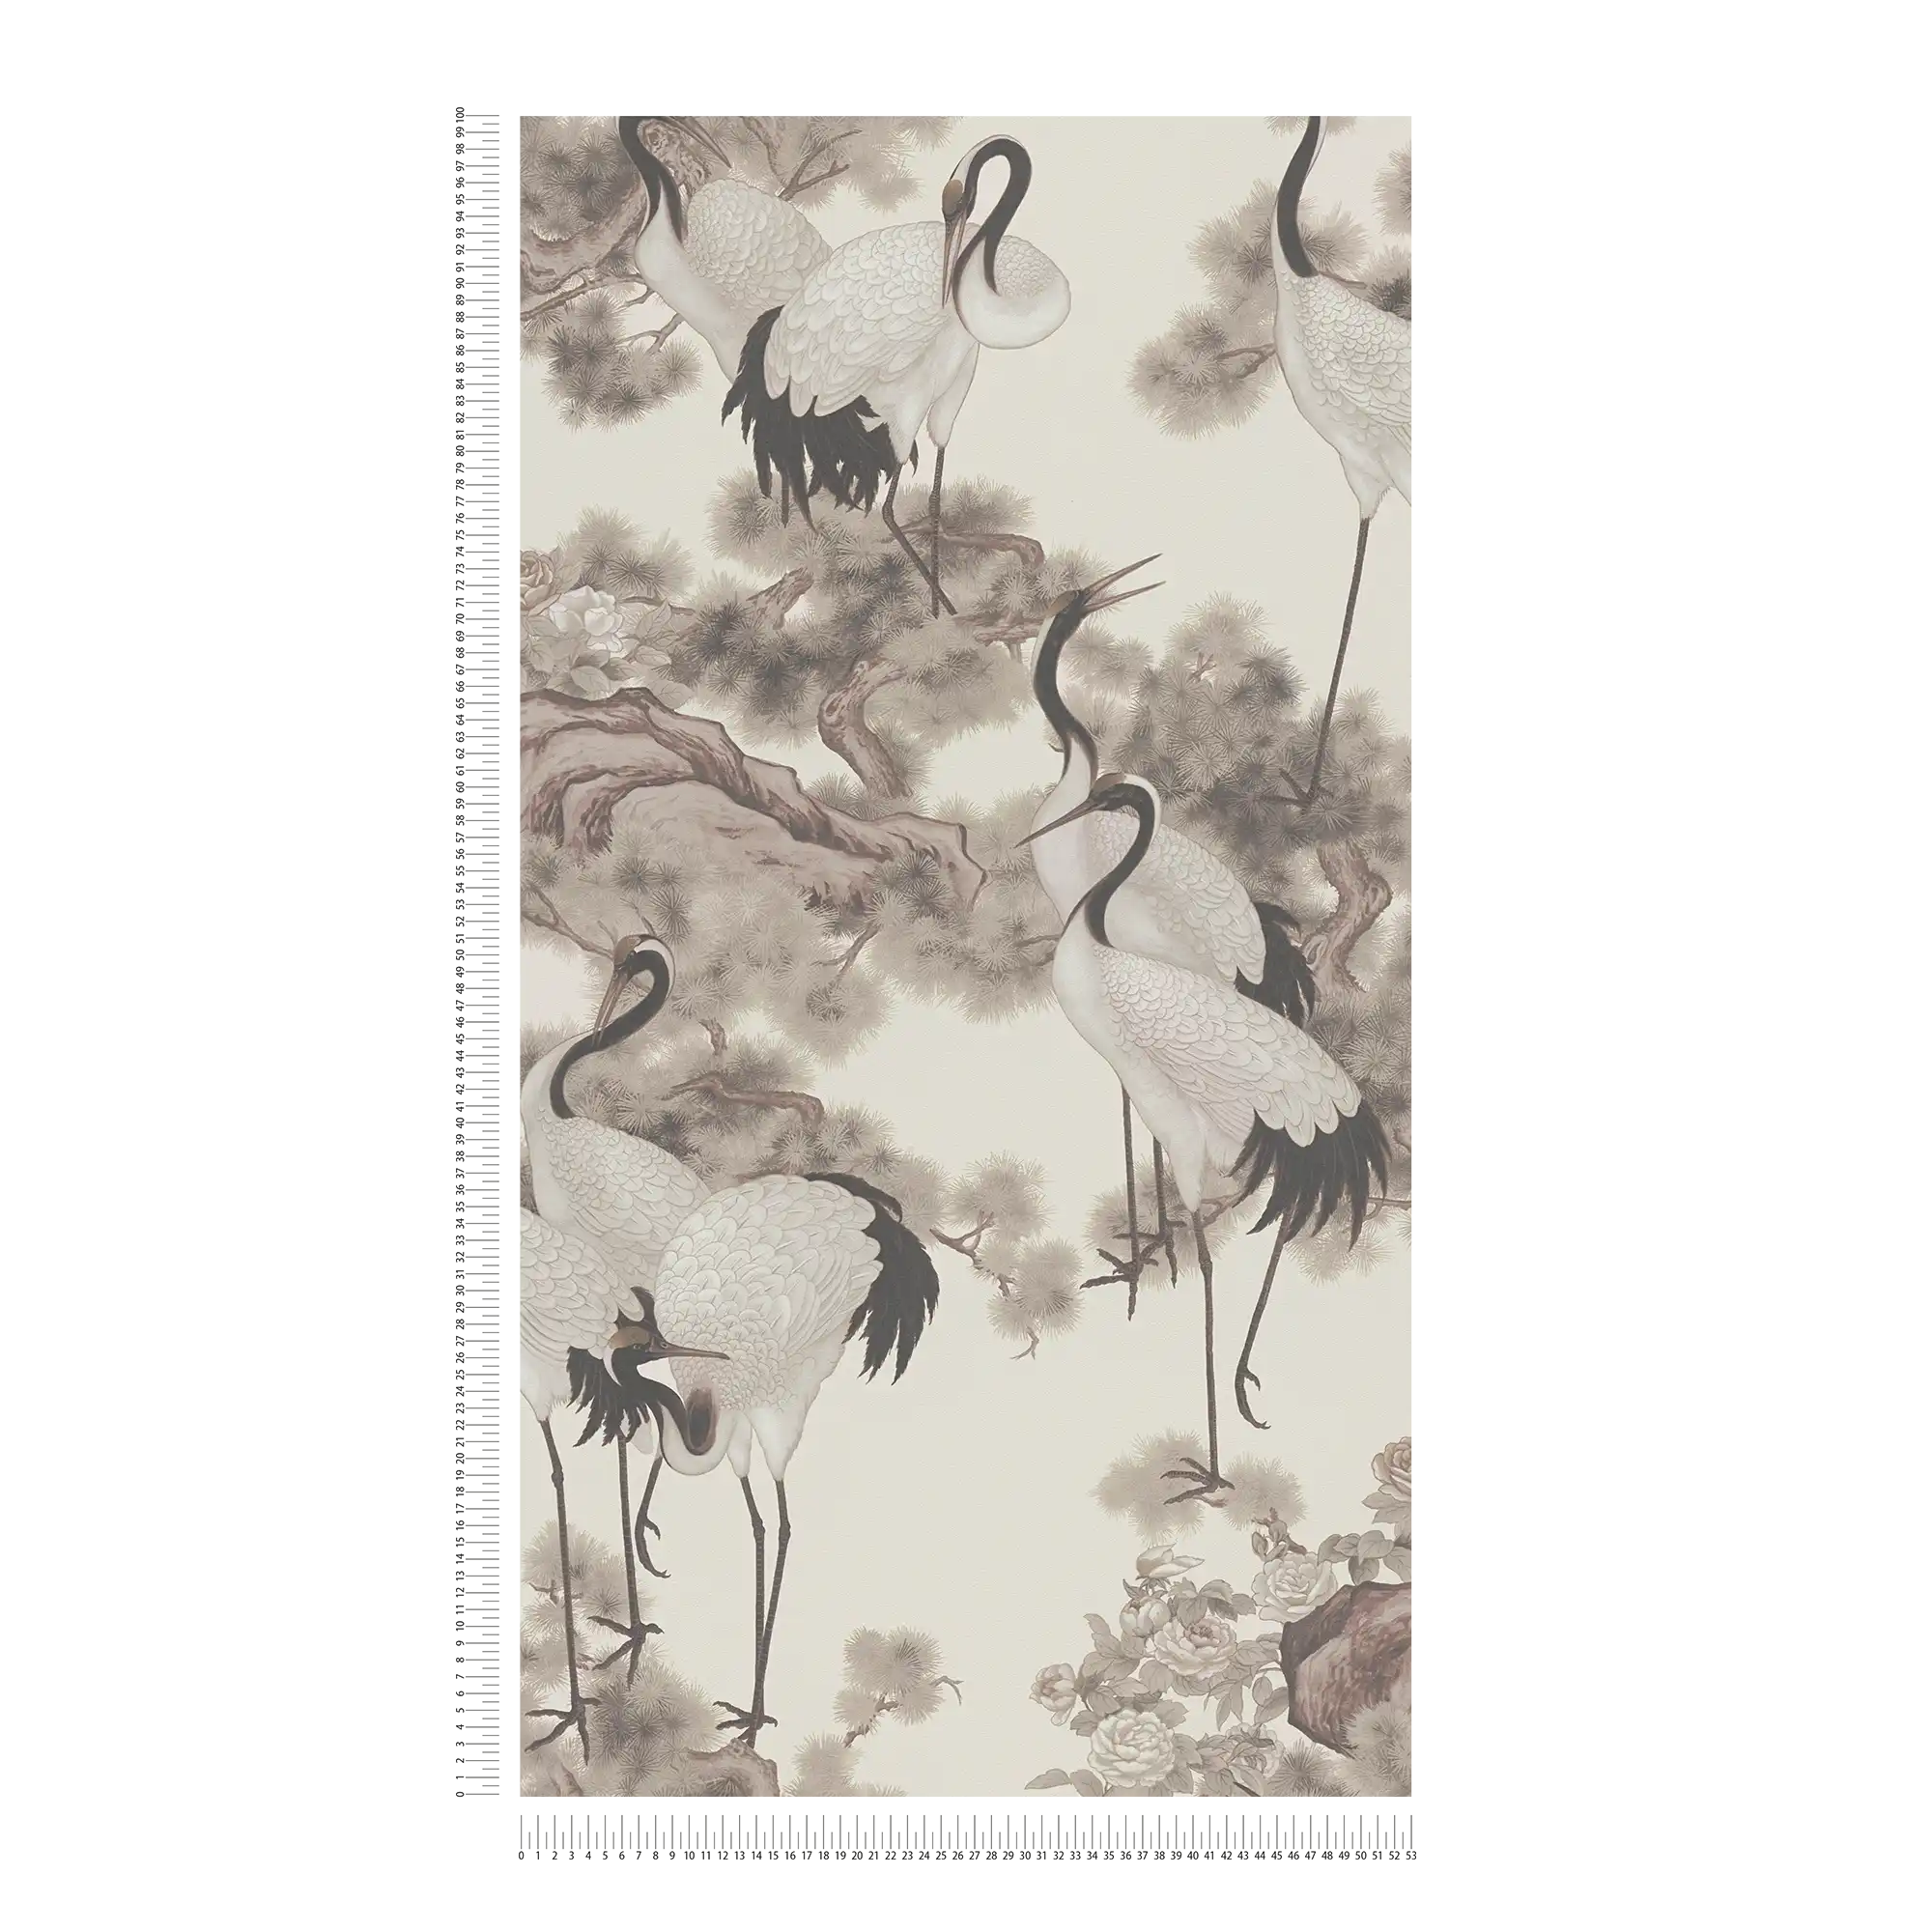             Japandi Tapete Kraniche im Asian Stil – Creme, Grau
        